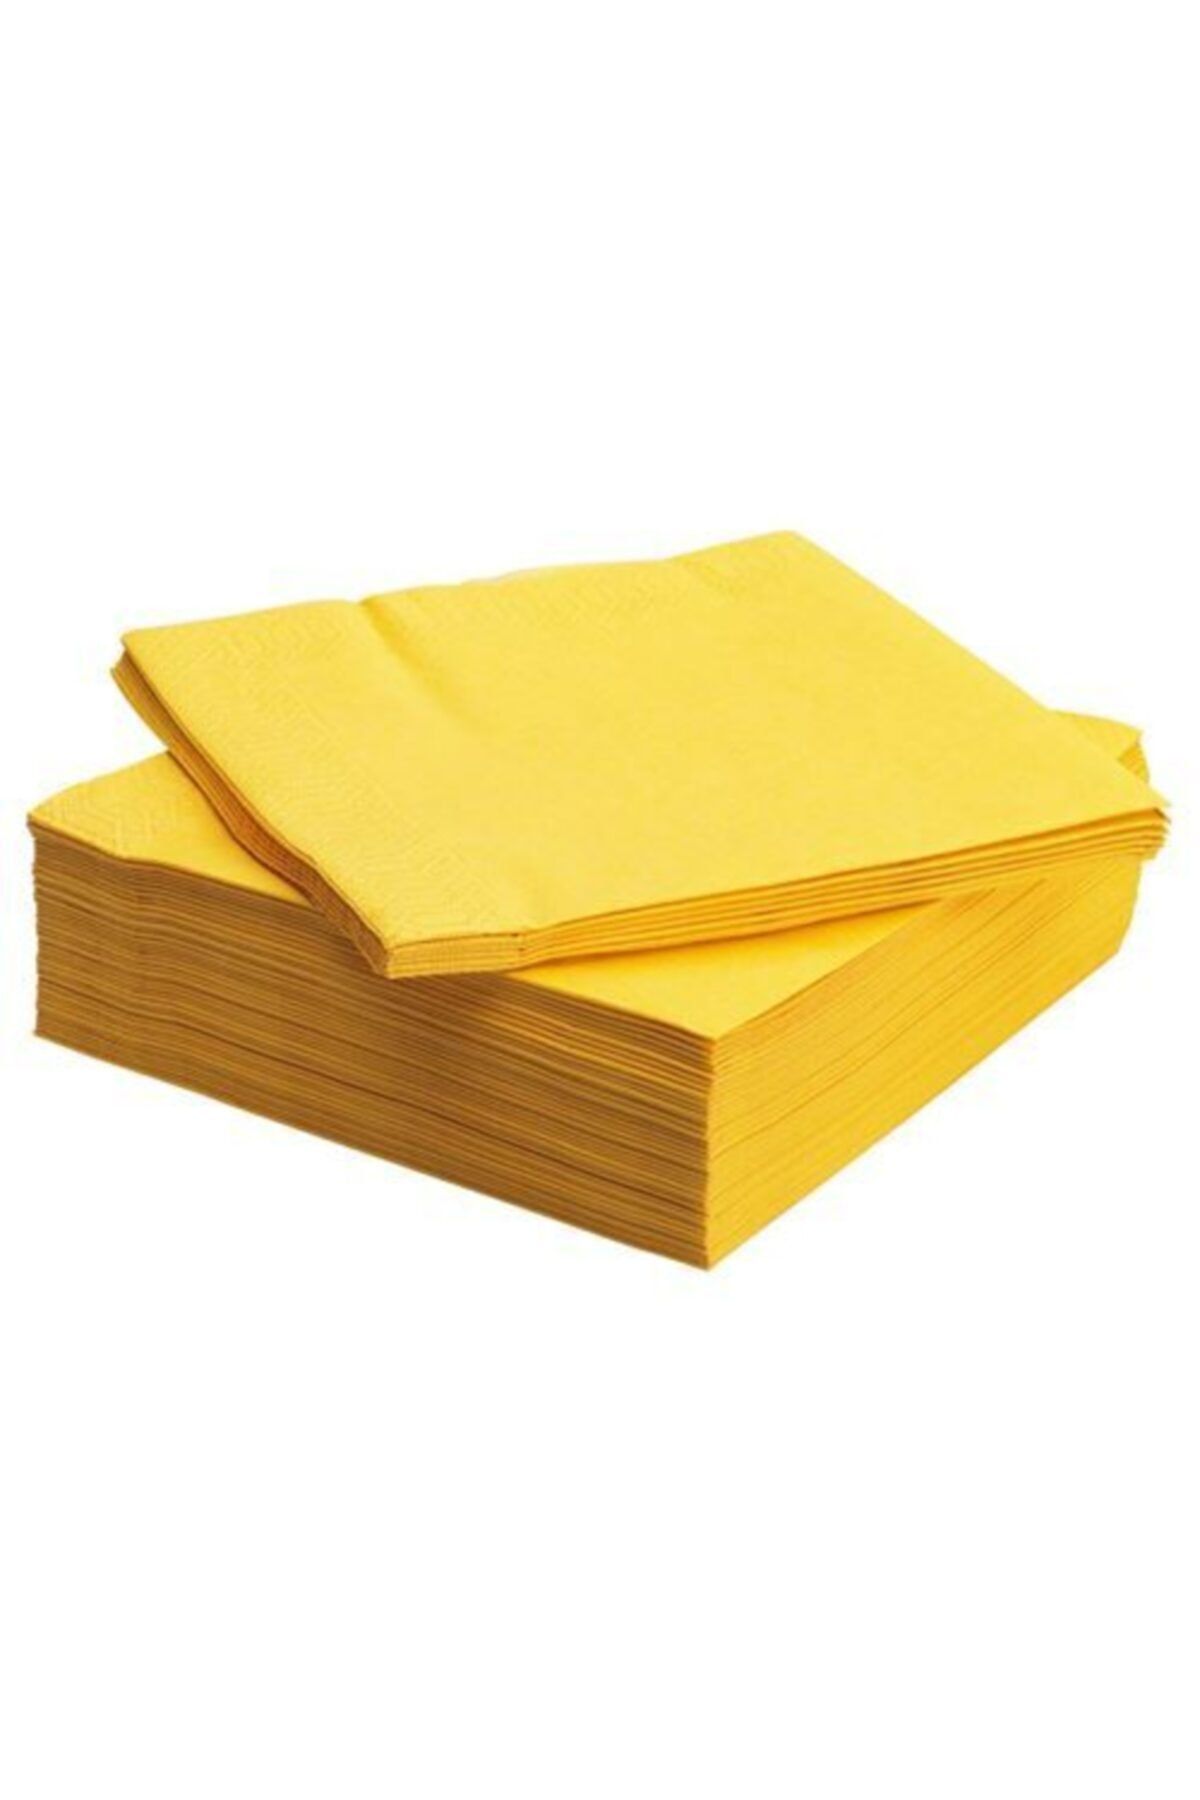 IKEA Servis Peçete Meridyendukkan 40x40 Cm 50 Adet Sarı Renkli Peçete